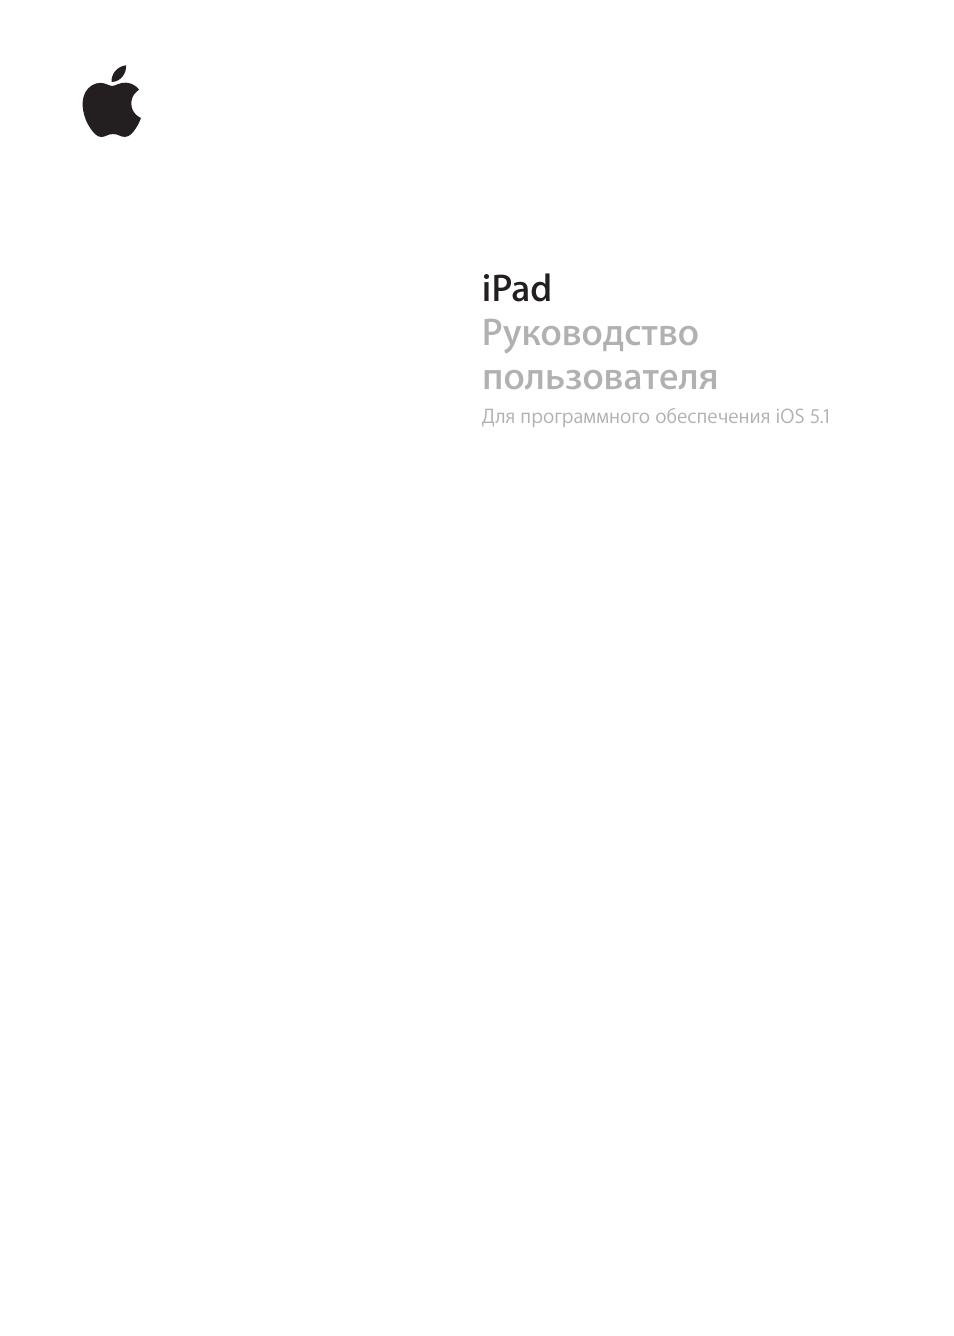 Инструкция по эксплуатации Apple iPad iOS 5.1 | 159 страниц